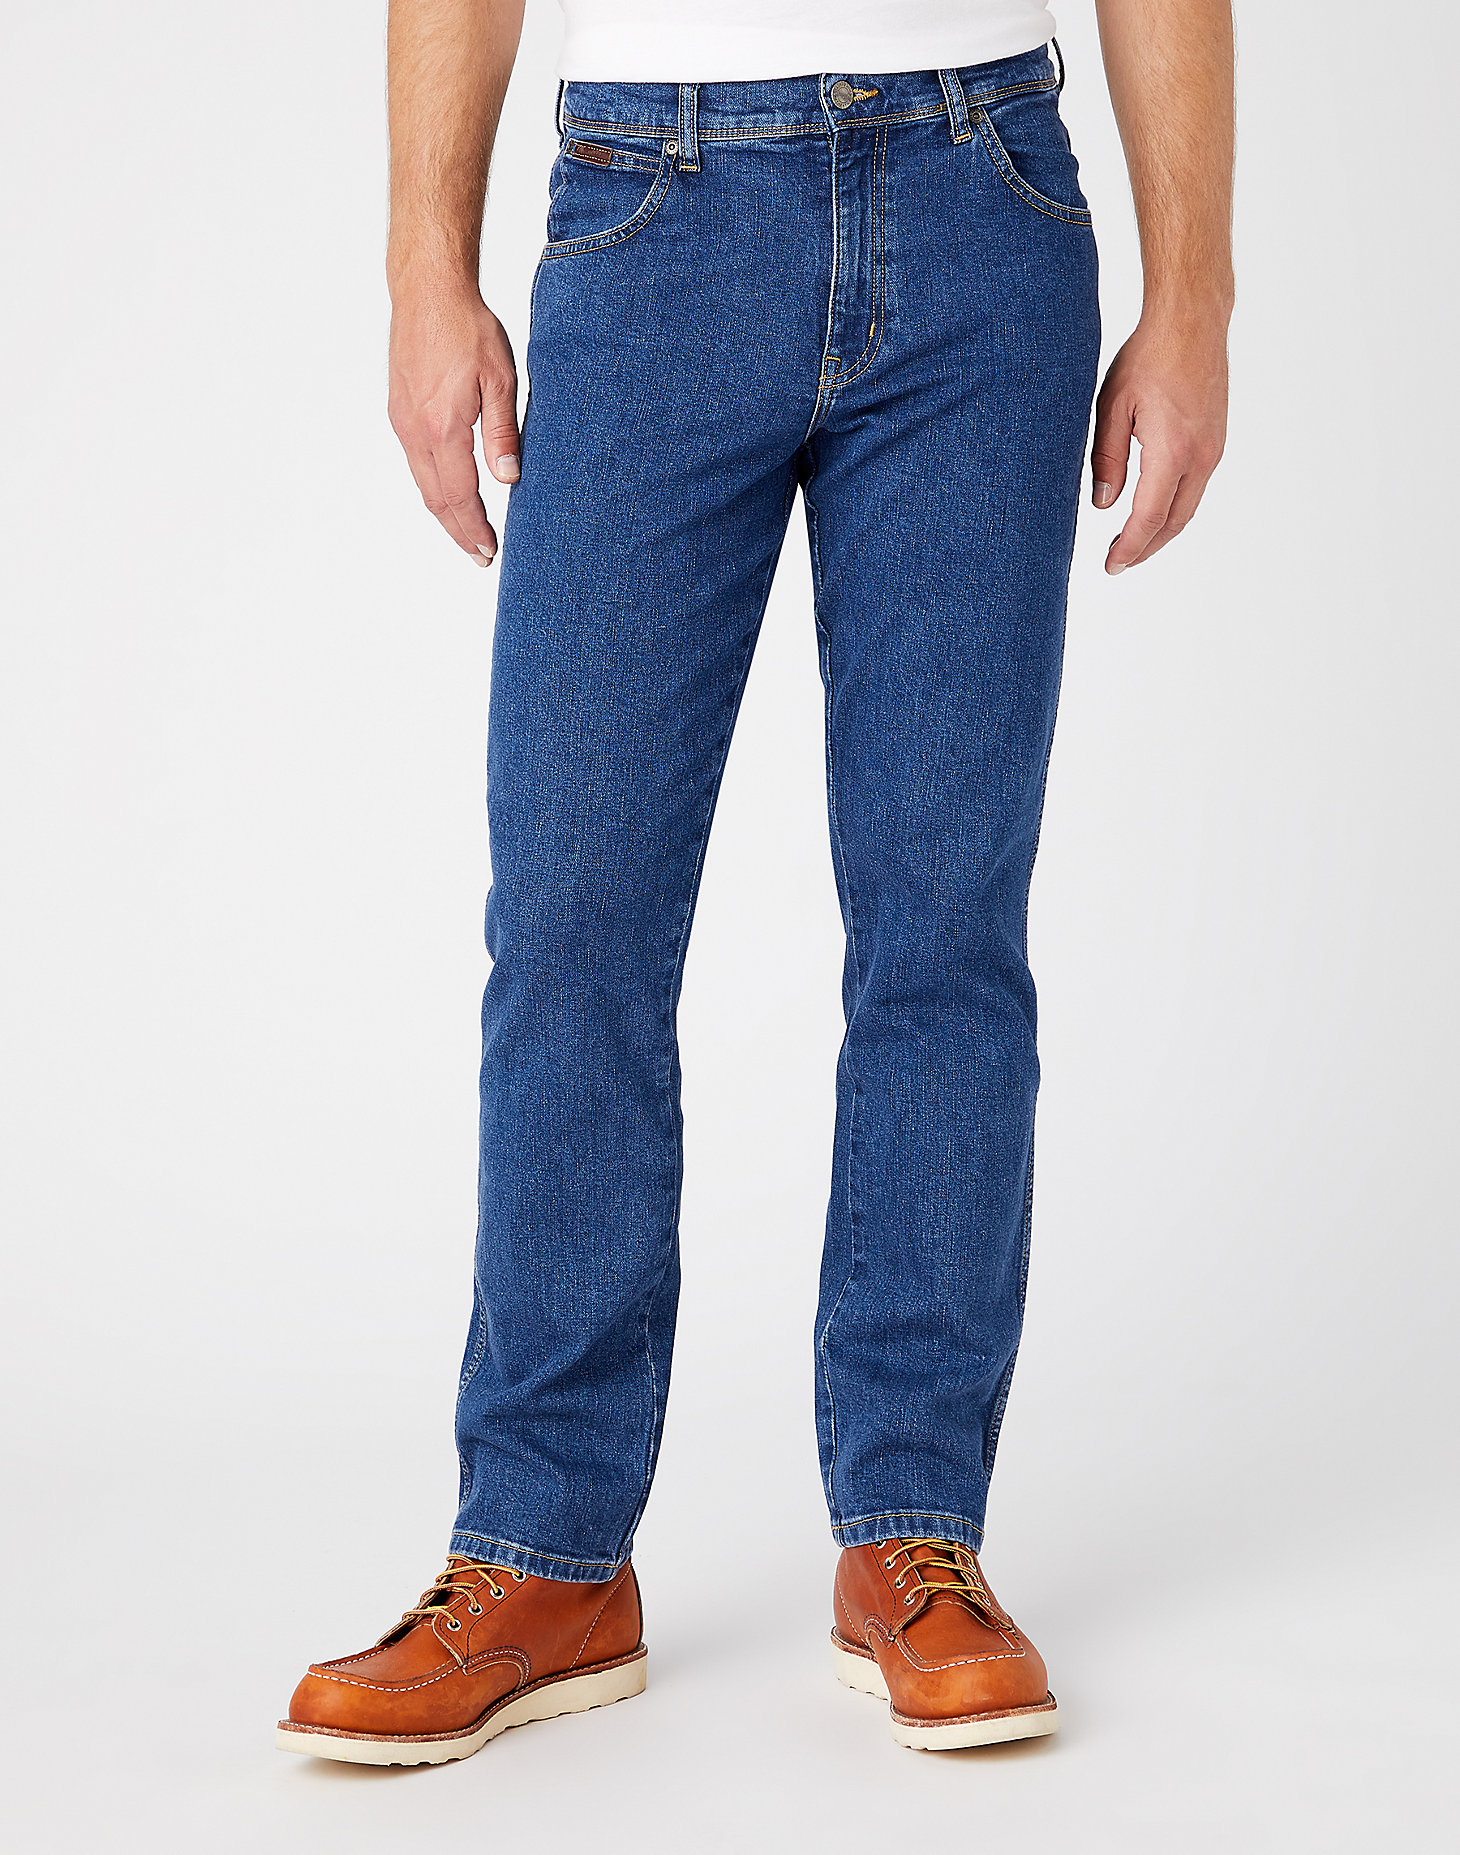 Para Hombre Tamaño Regular Jeans Lavado a La Piedra Regular Fit Jeans de gran tamaño 50,52,54,56